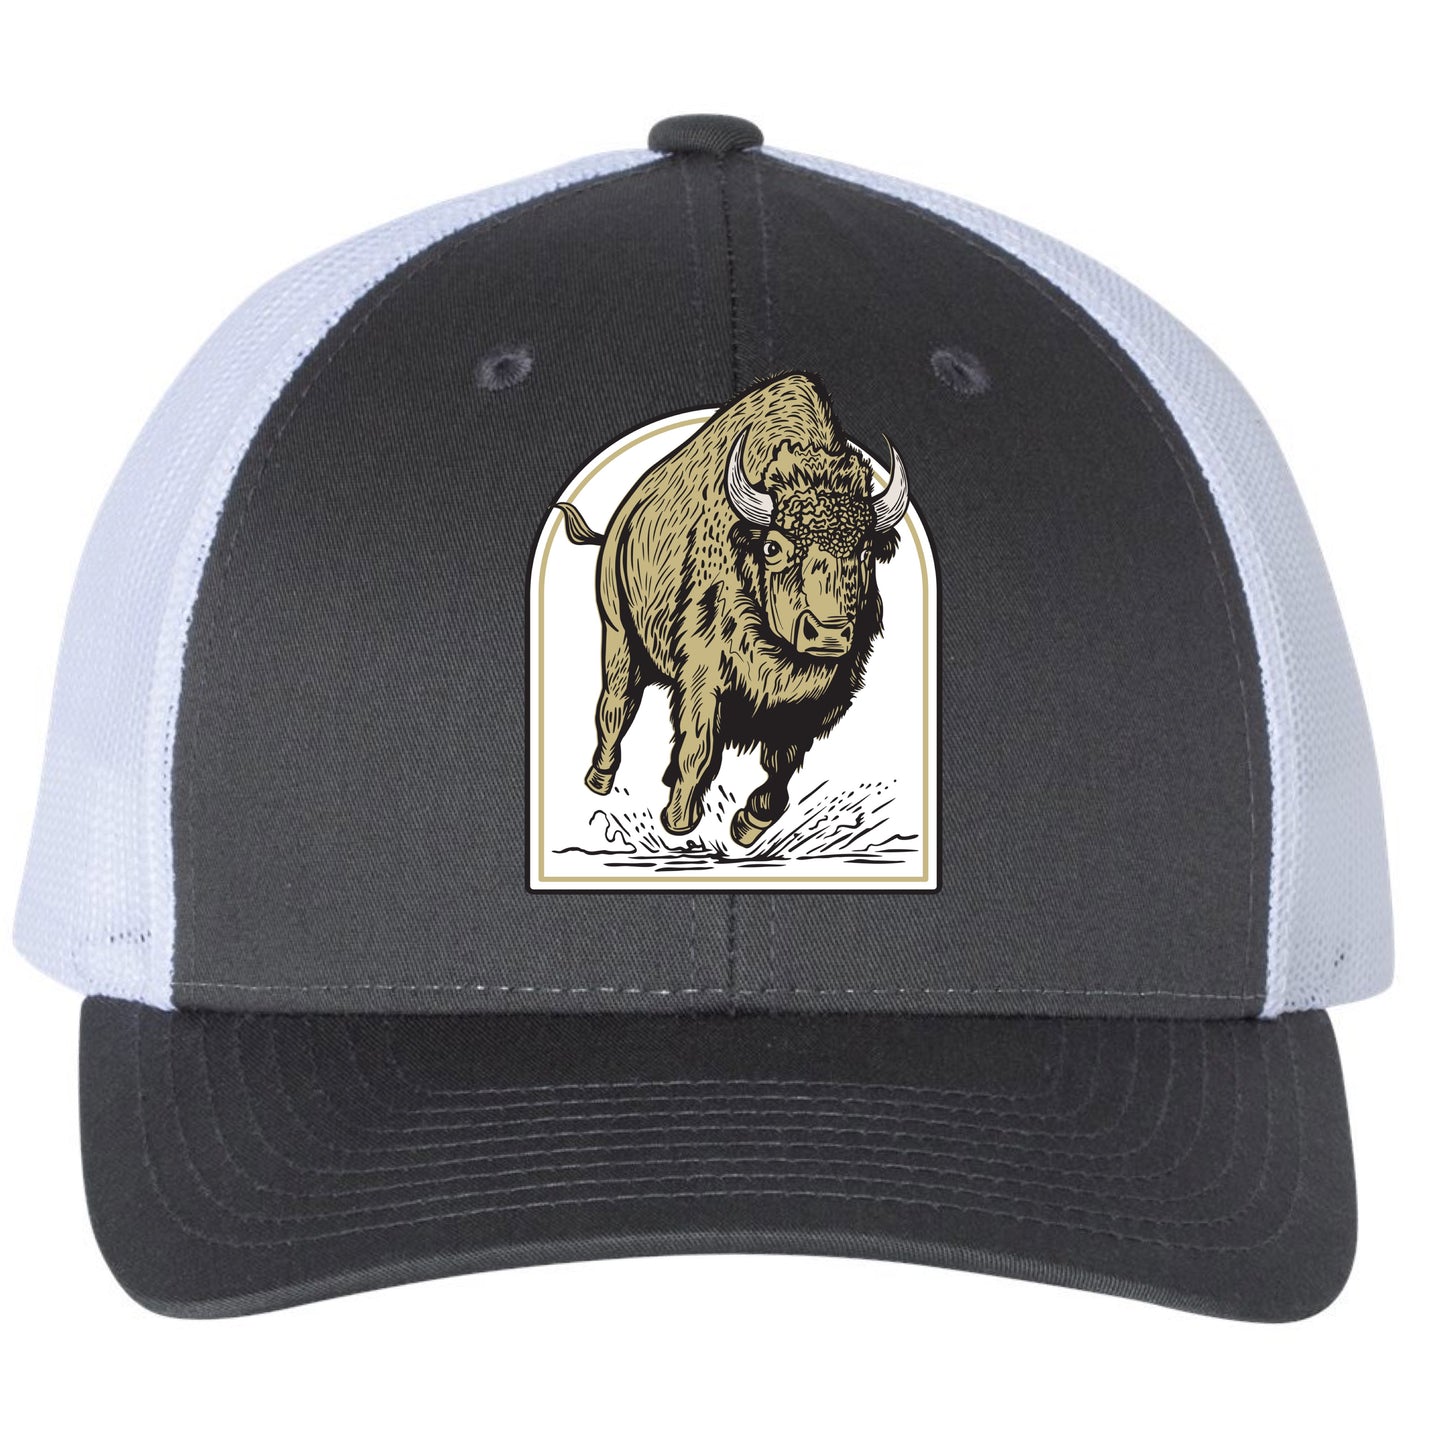 Colorado Wild Buffaloes Mascot Series 3D Patch Snapback Trucker Hat- Charcoal/ White - Ten Gallon Hat Co.